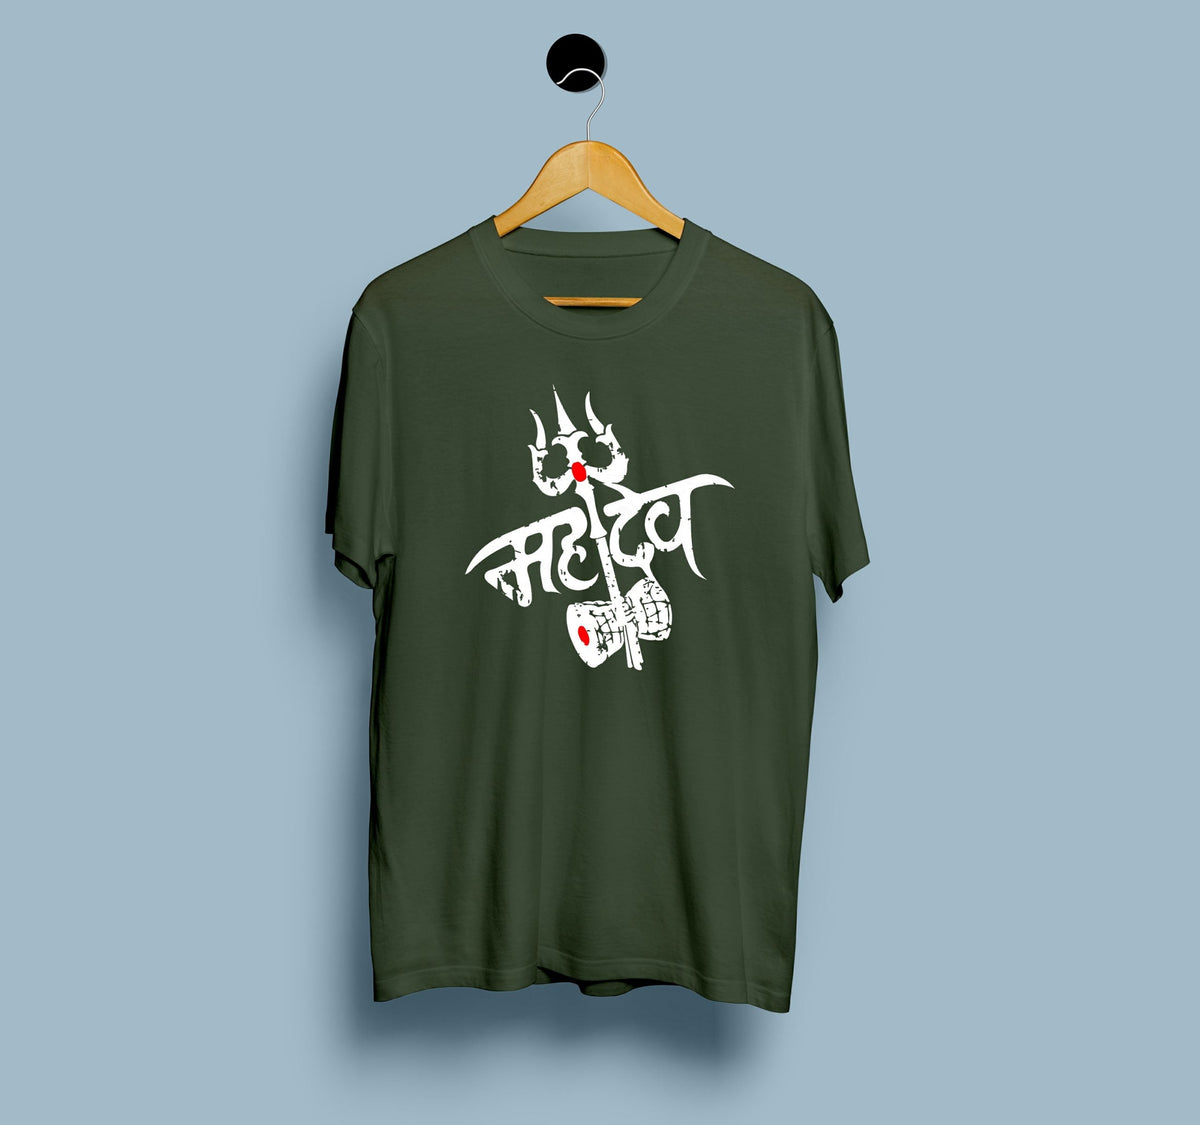 Mahadev T Shirt